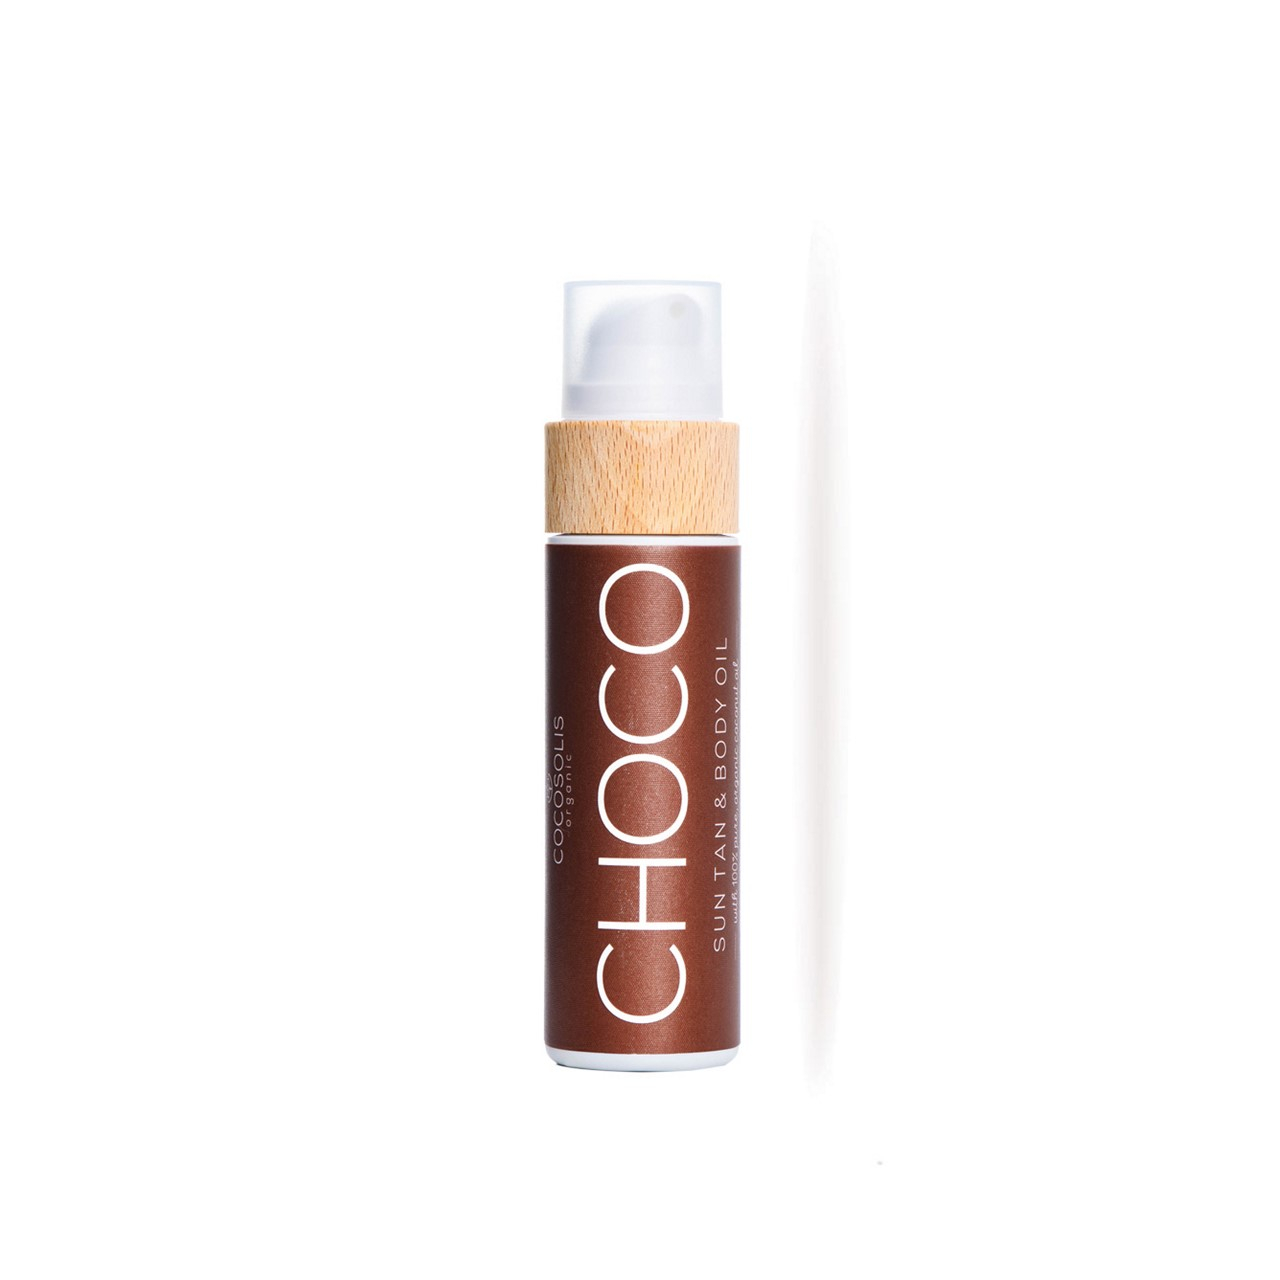 COCOSOLIS Choco Suntan & Body Oil 200ml